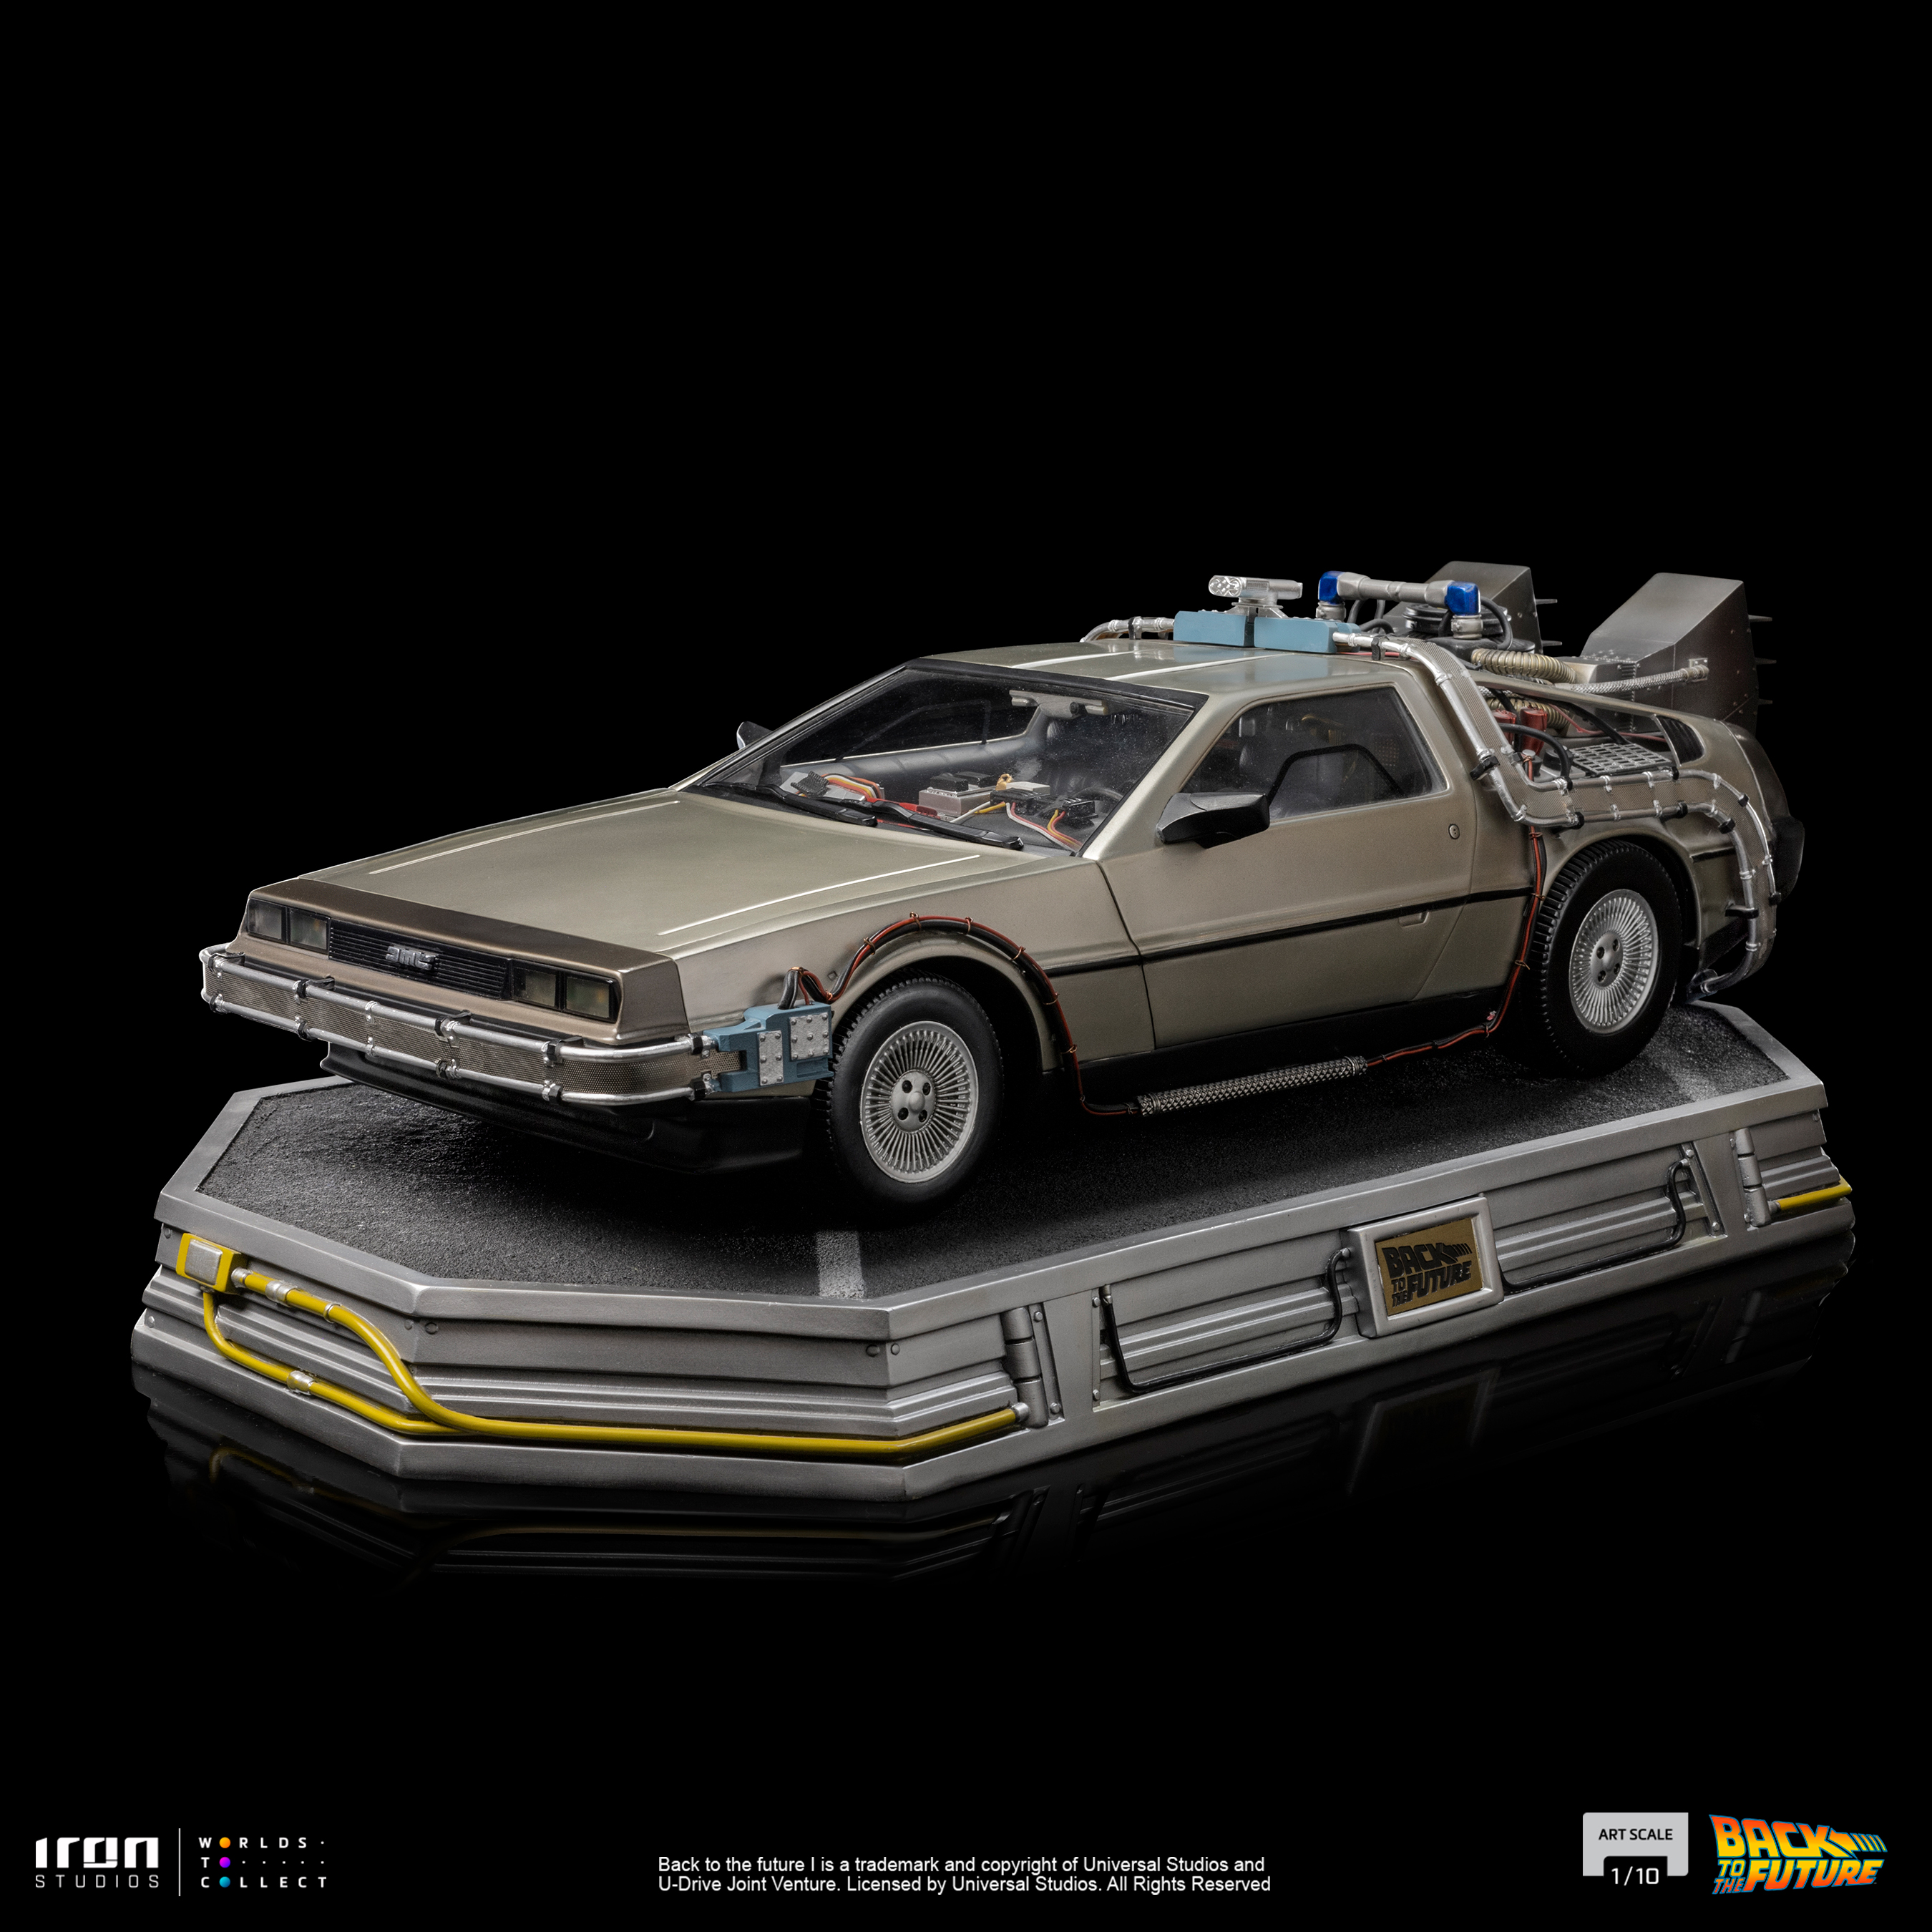 DeLorean Collector Edition (Prototype Shown) View 4